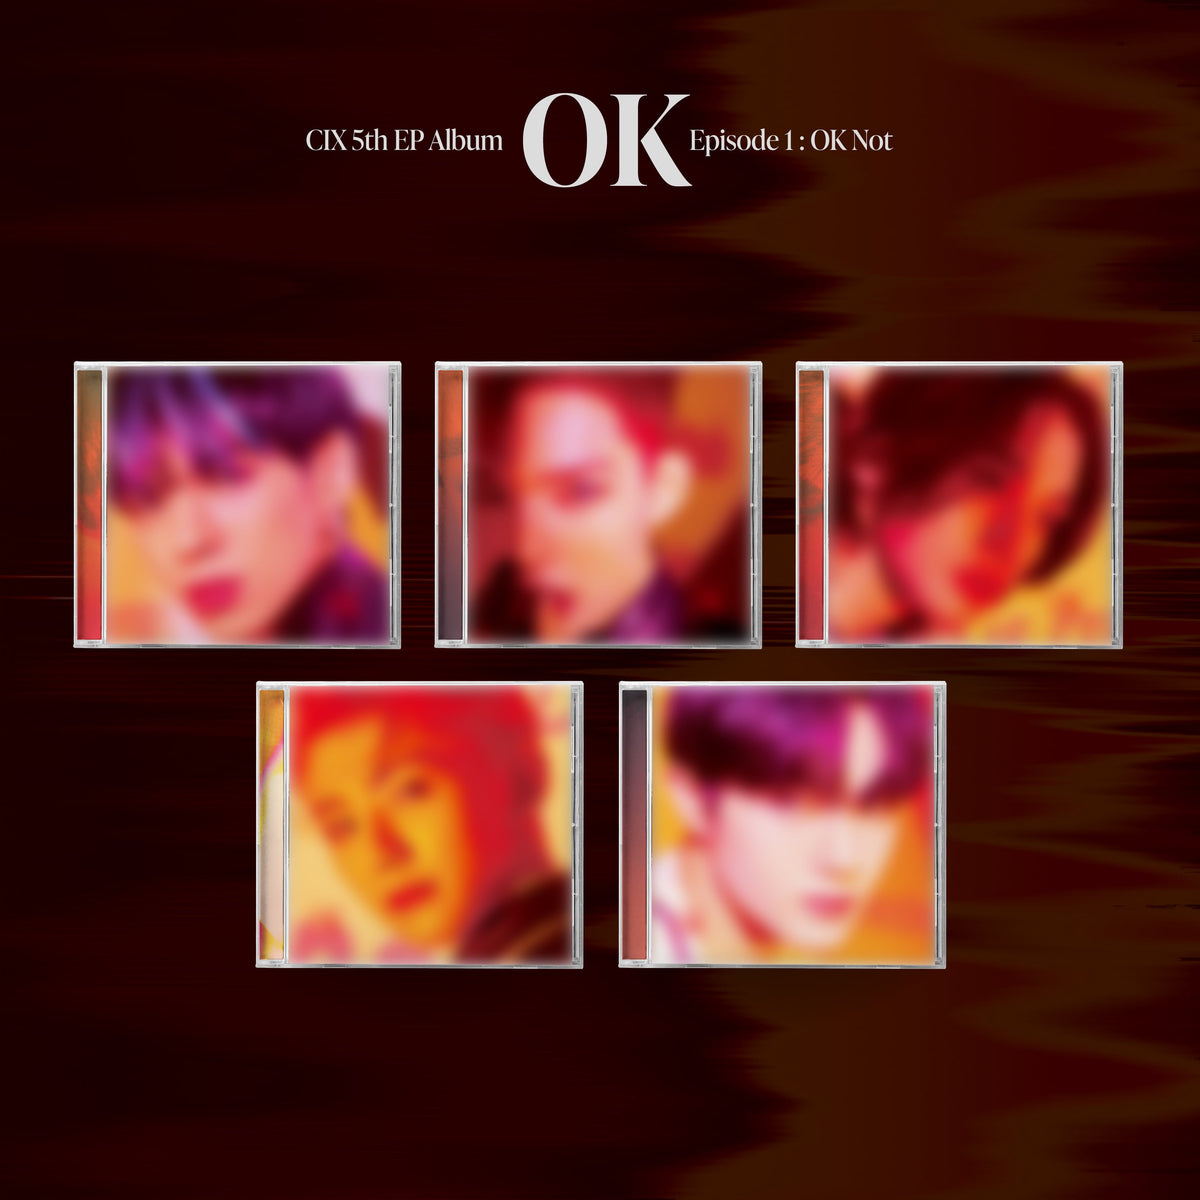 CIX 5th EP Album [‘OK’ Episode 1 : OK Not] (Jewel Ver.)